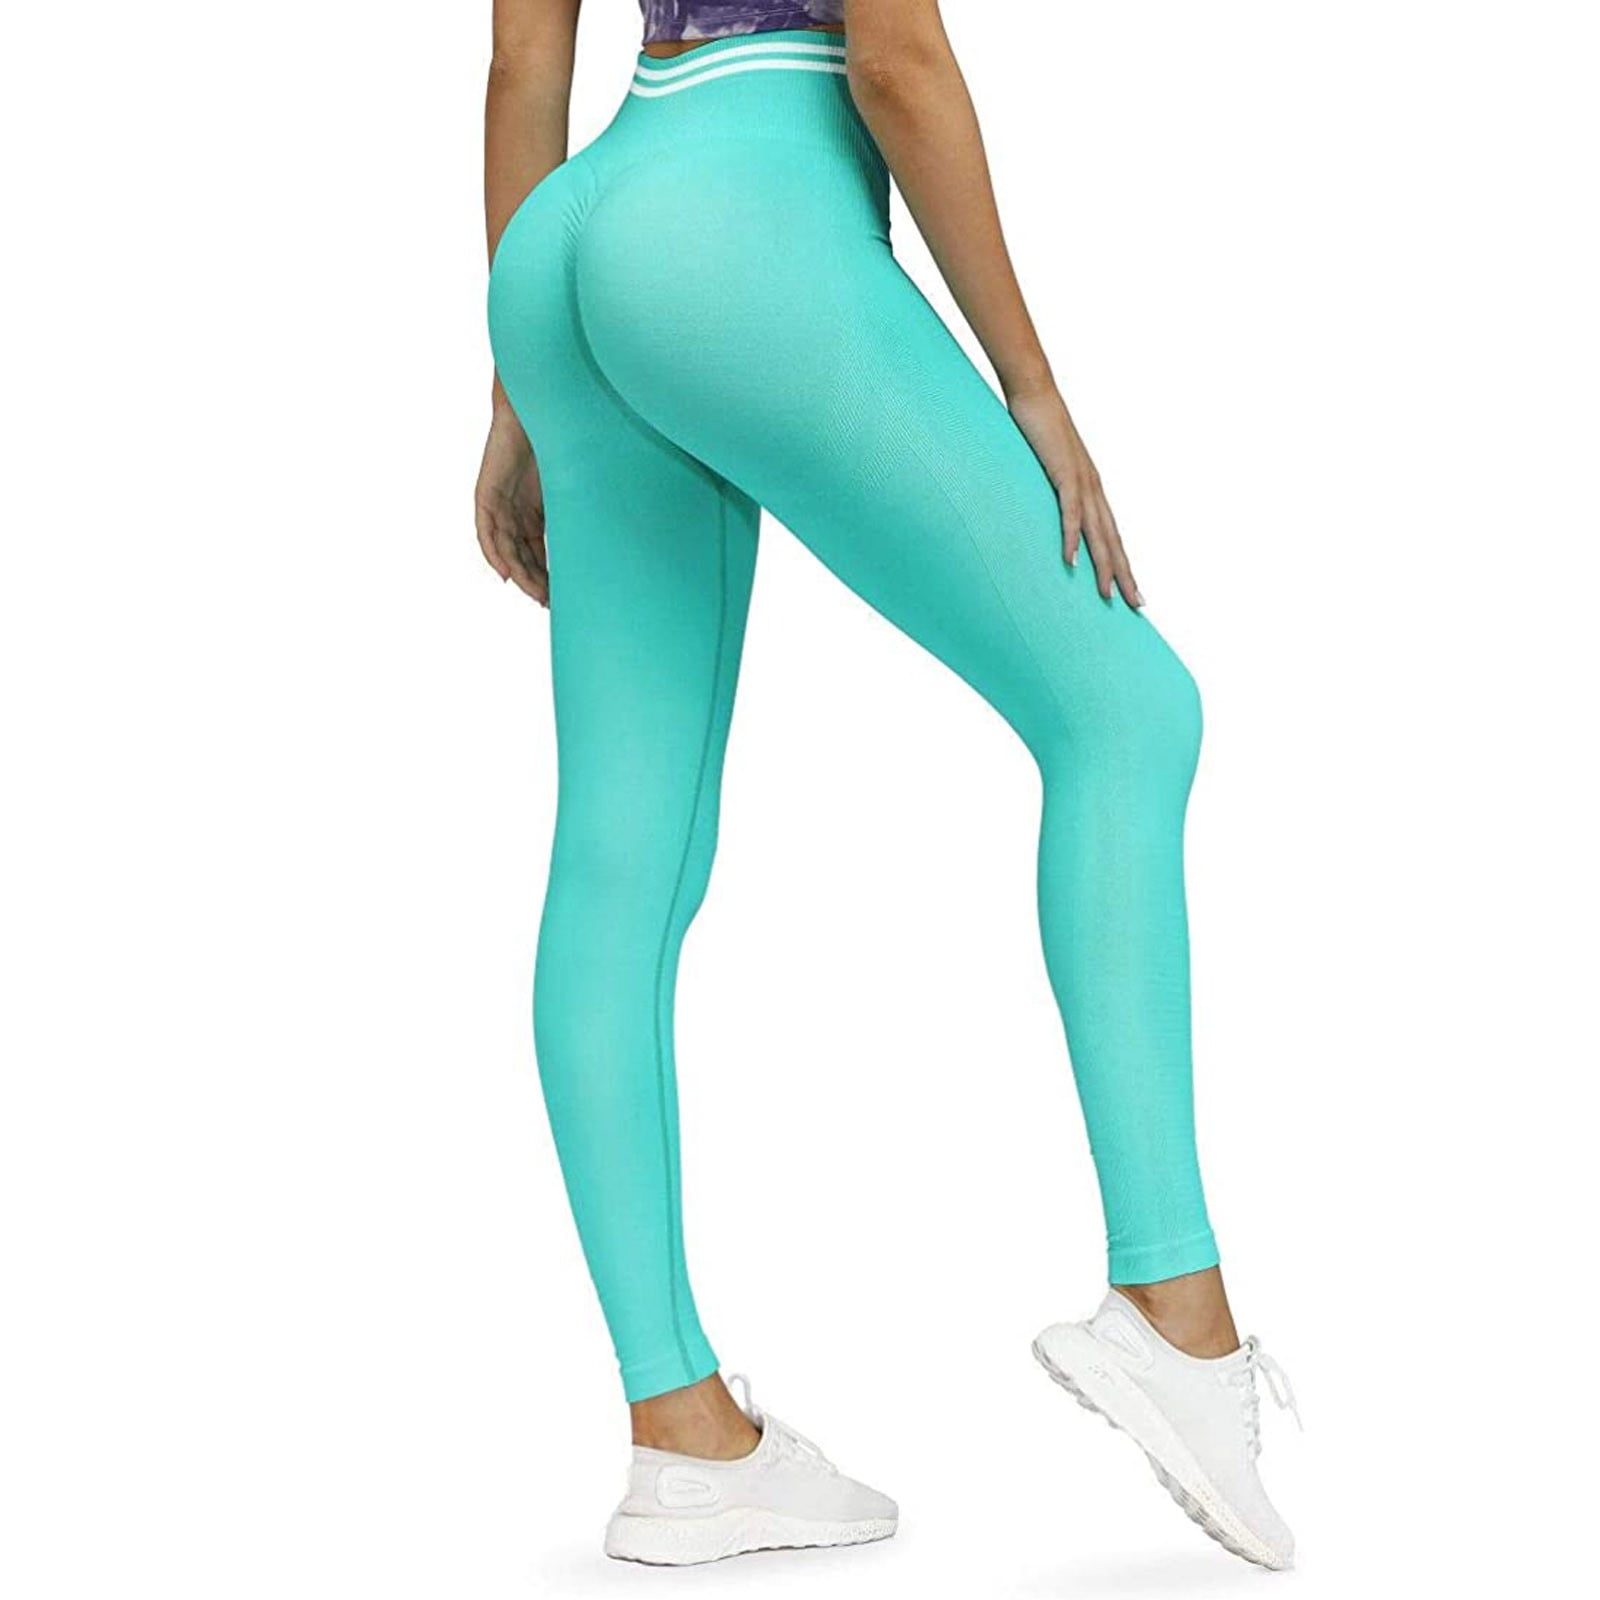 Mrat Yoga Full Length Pants Yoga Pants Women Ladies Solid Workout Leggings  Fitness Sports Running Yoga Athletic Pants Jeans Pants Jumpsuits